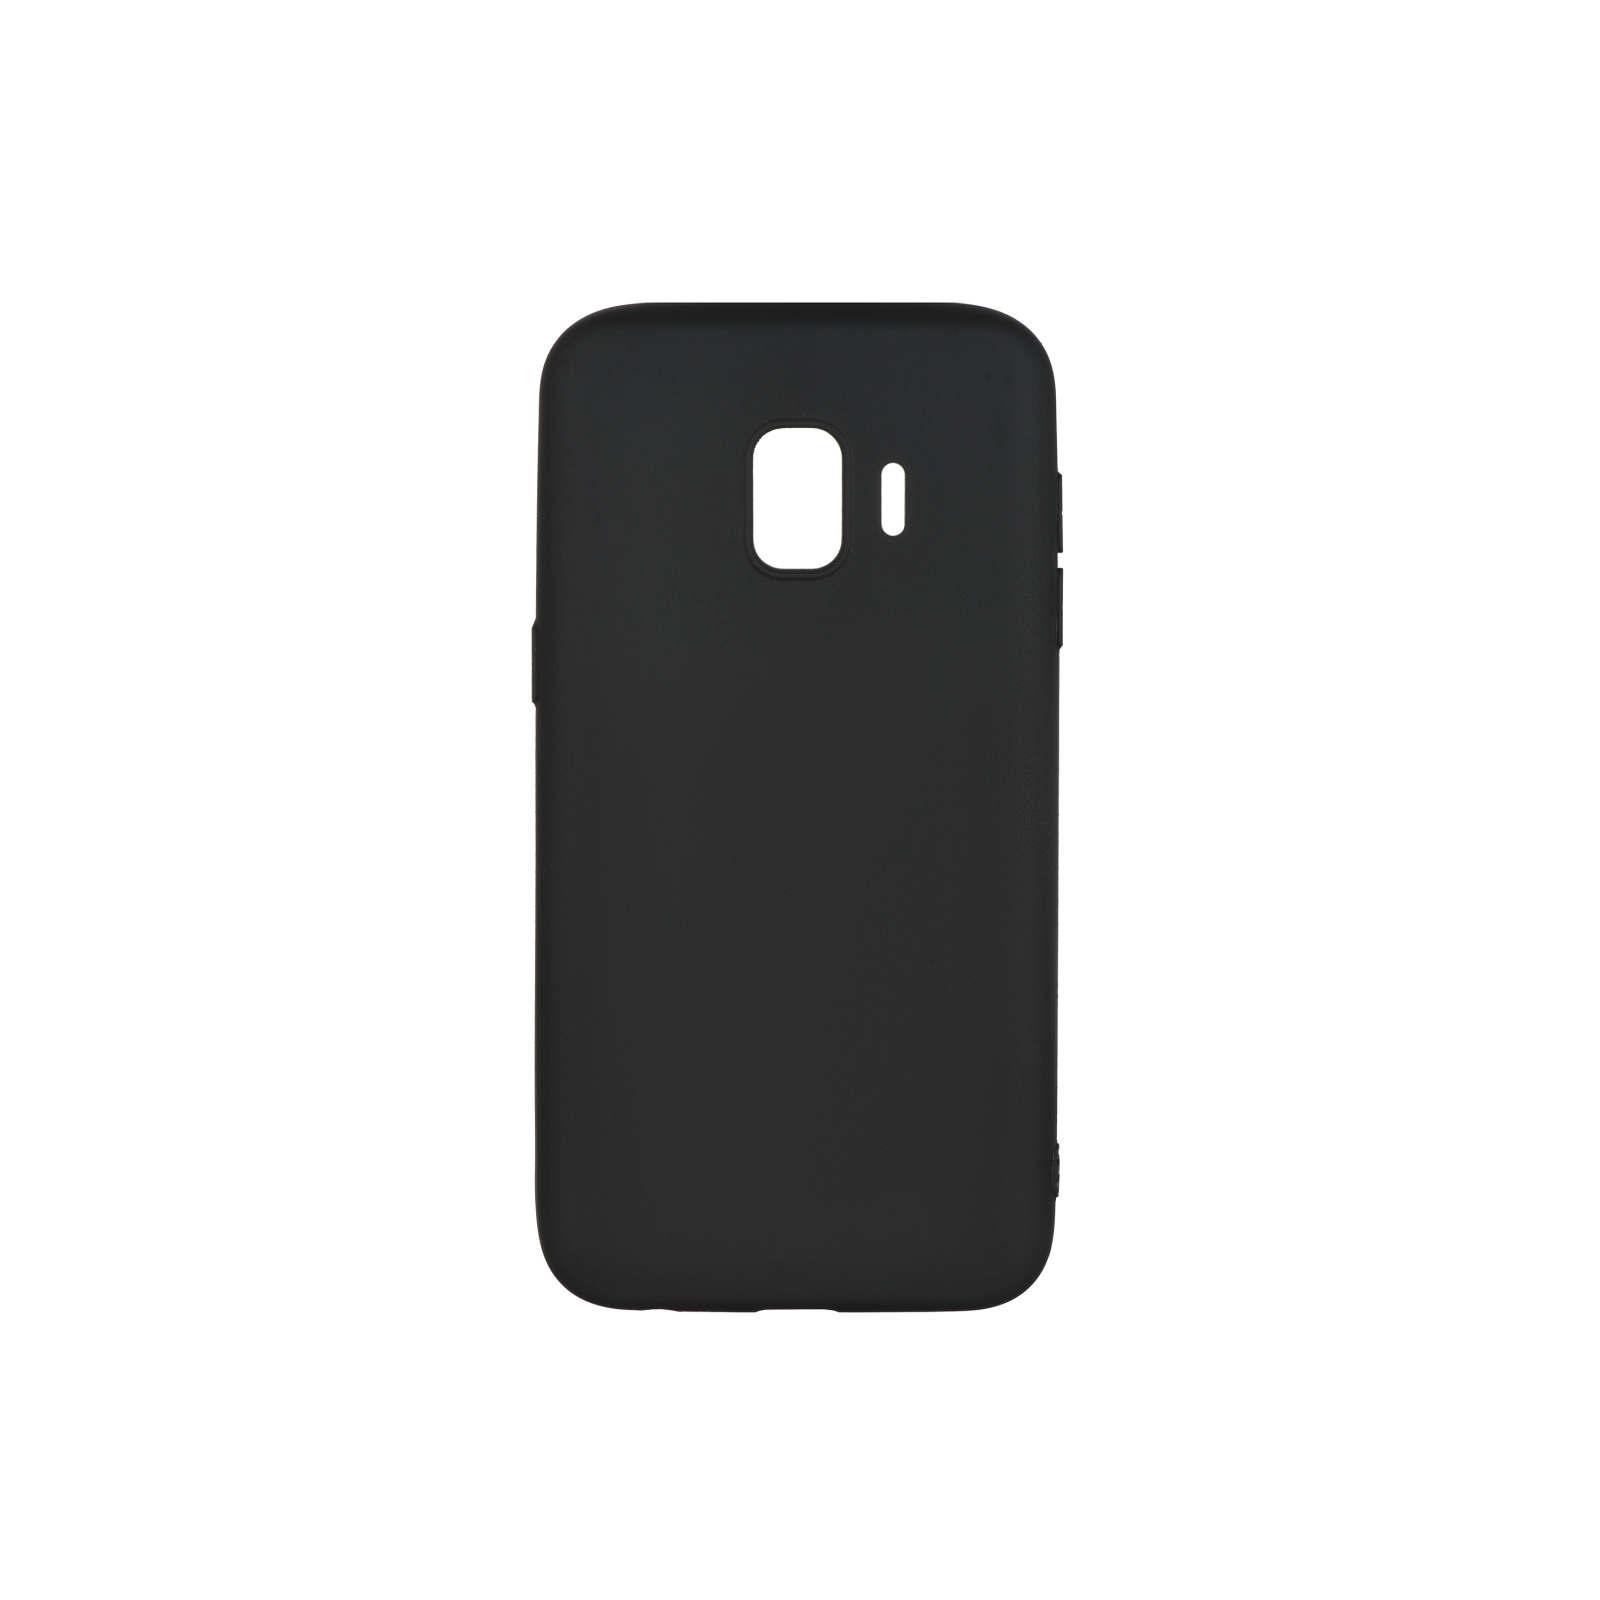 Чехол для мобильного телефона 2E Samsung Galaxy J2 core 2018 (J260) , Soft touch, Black (2E-G-J2C-18-NKST-BK)